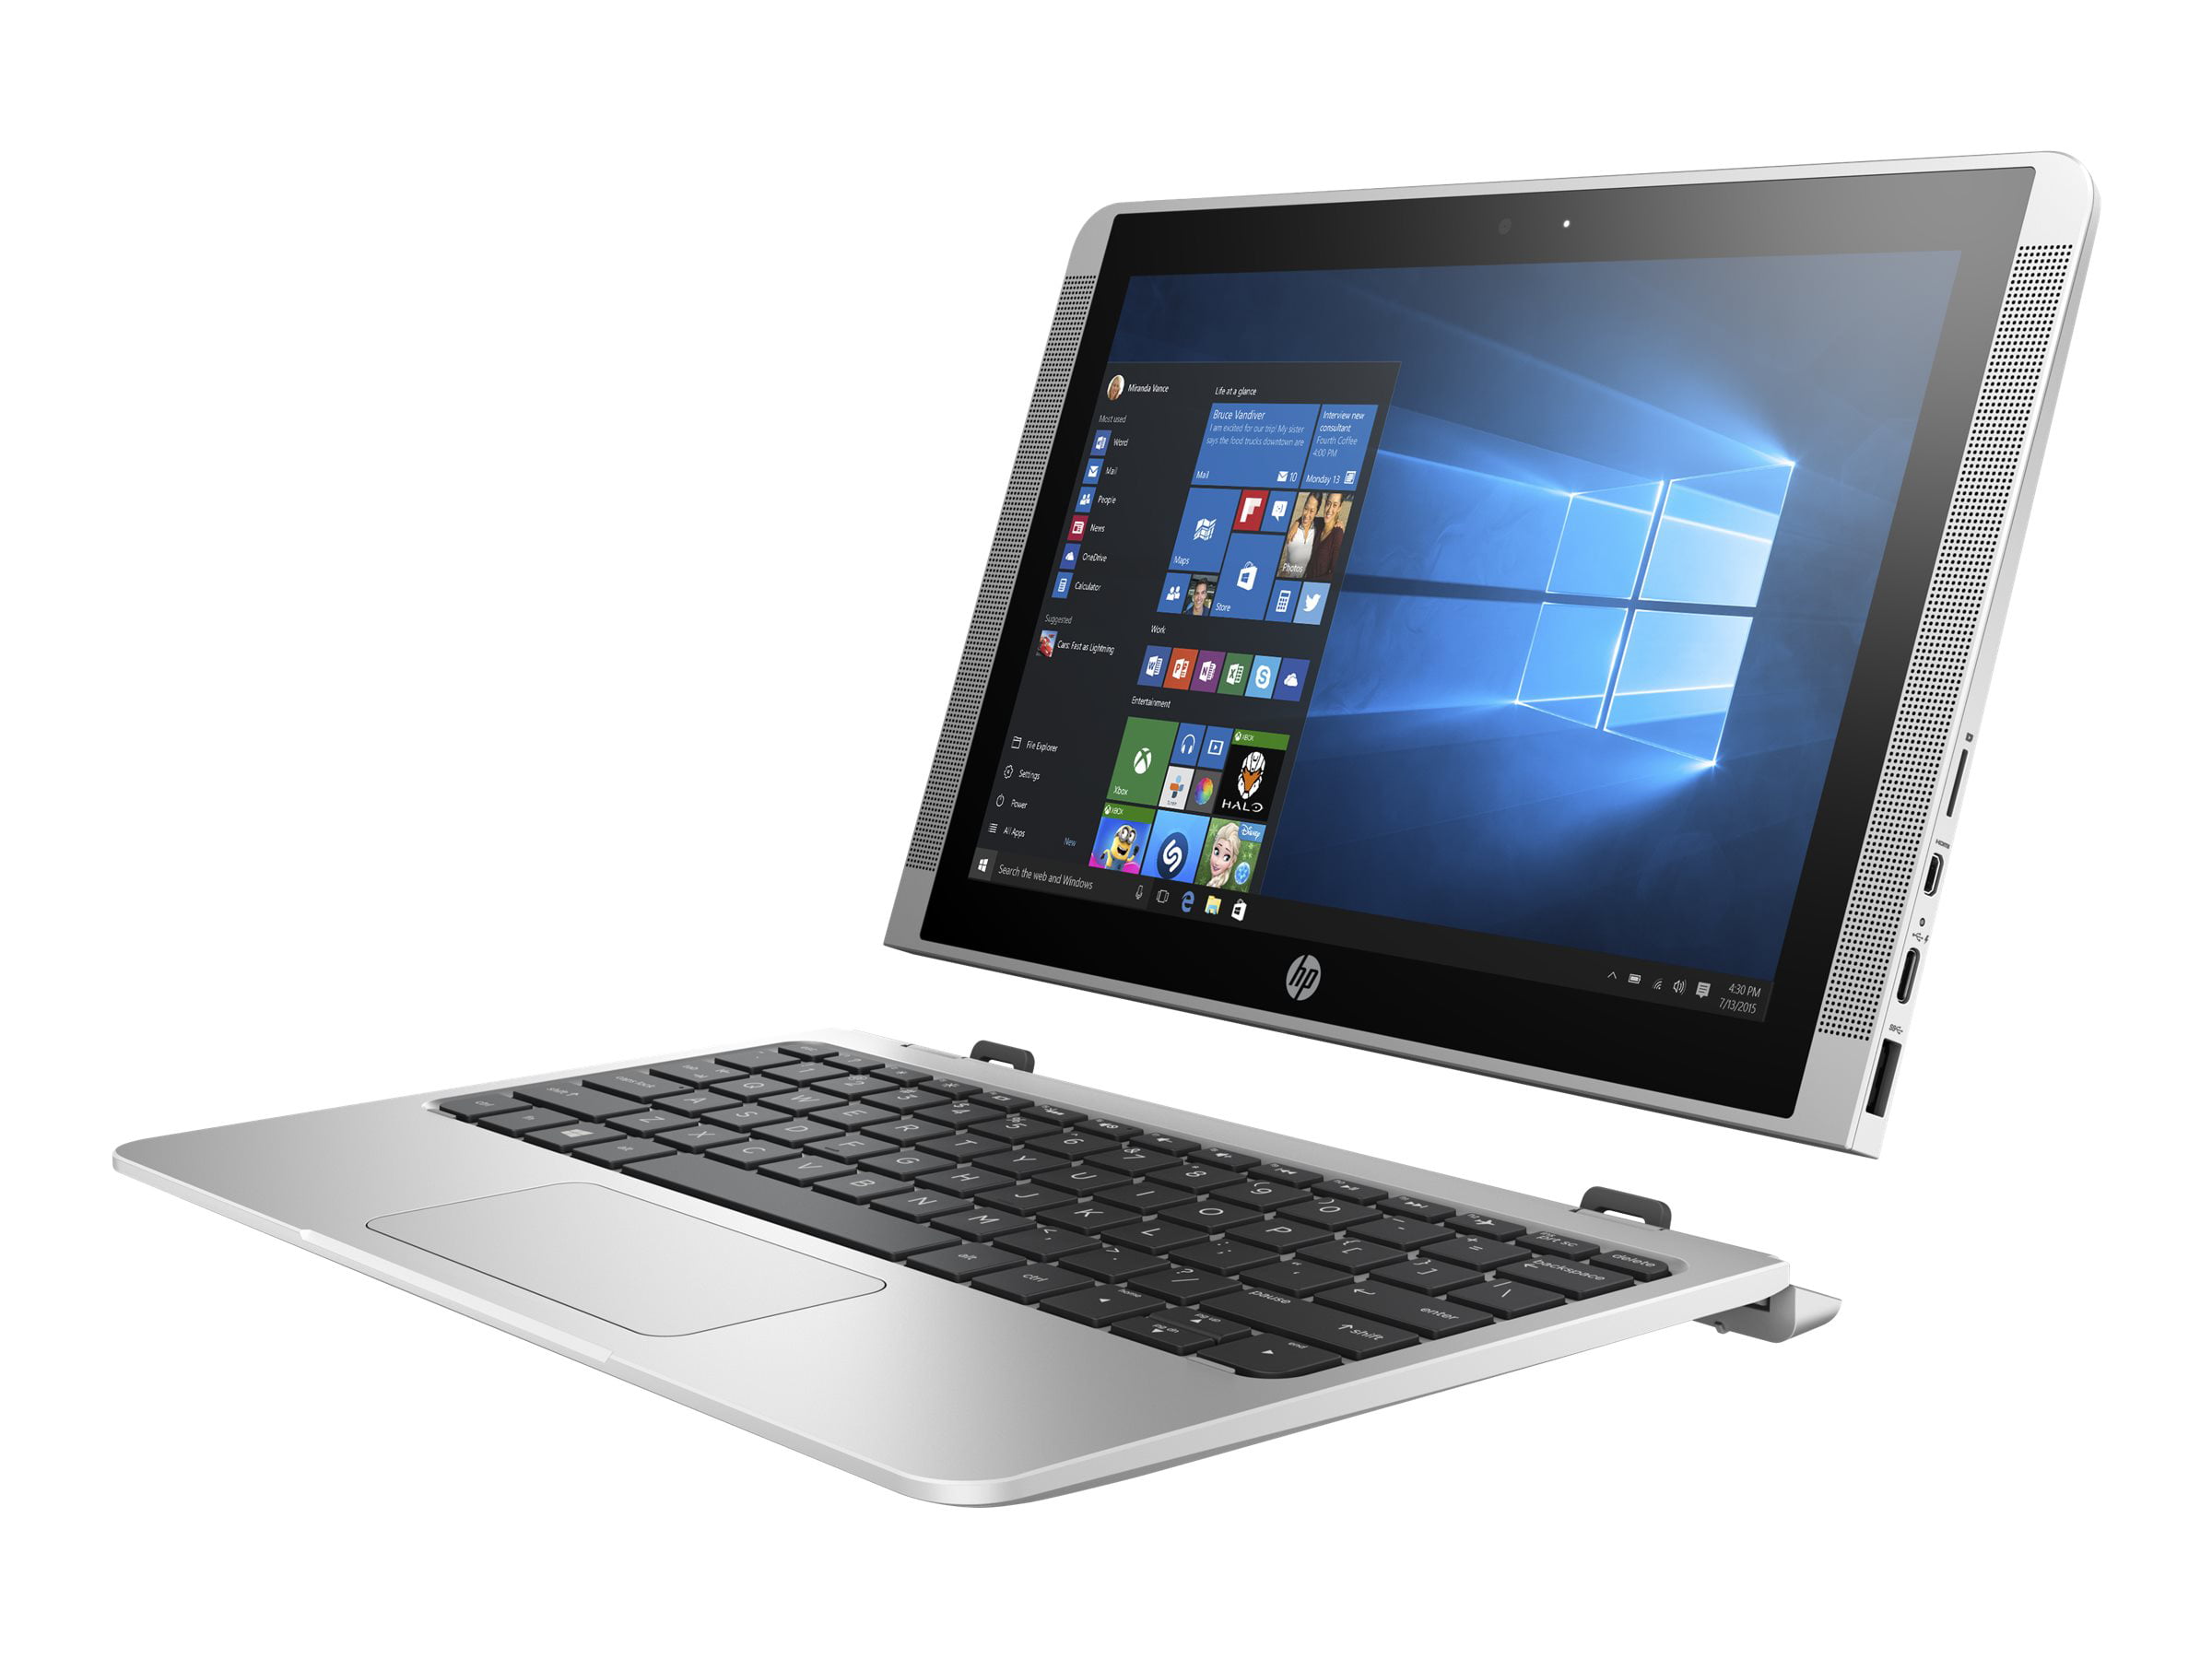 HP 210 G2 - With detachable keyboard - Atom x5 Z8350 / 1.44 GHz - Win 10 64-bit - 4 GB RAM - GB eMMC - 10.1" AHVA touchscreen 1280 x 800 - HD Graphics 400 Wi-Fi - kbd: US - Walmart.com